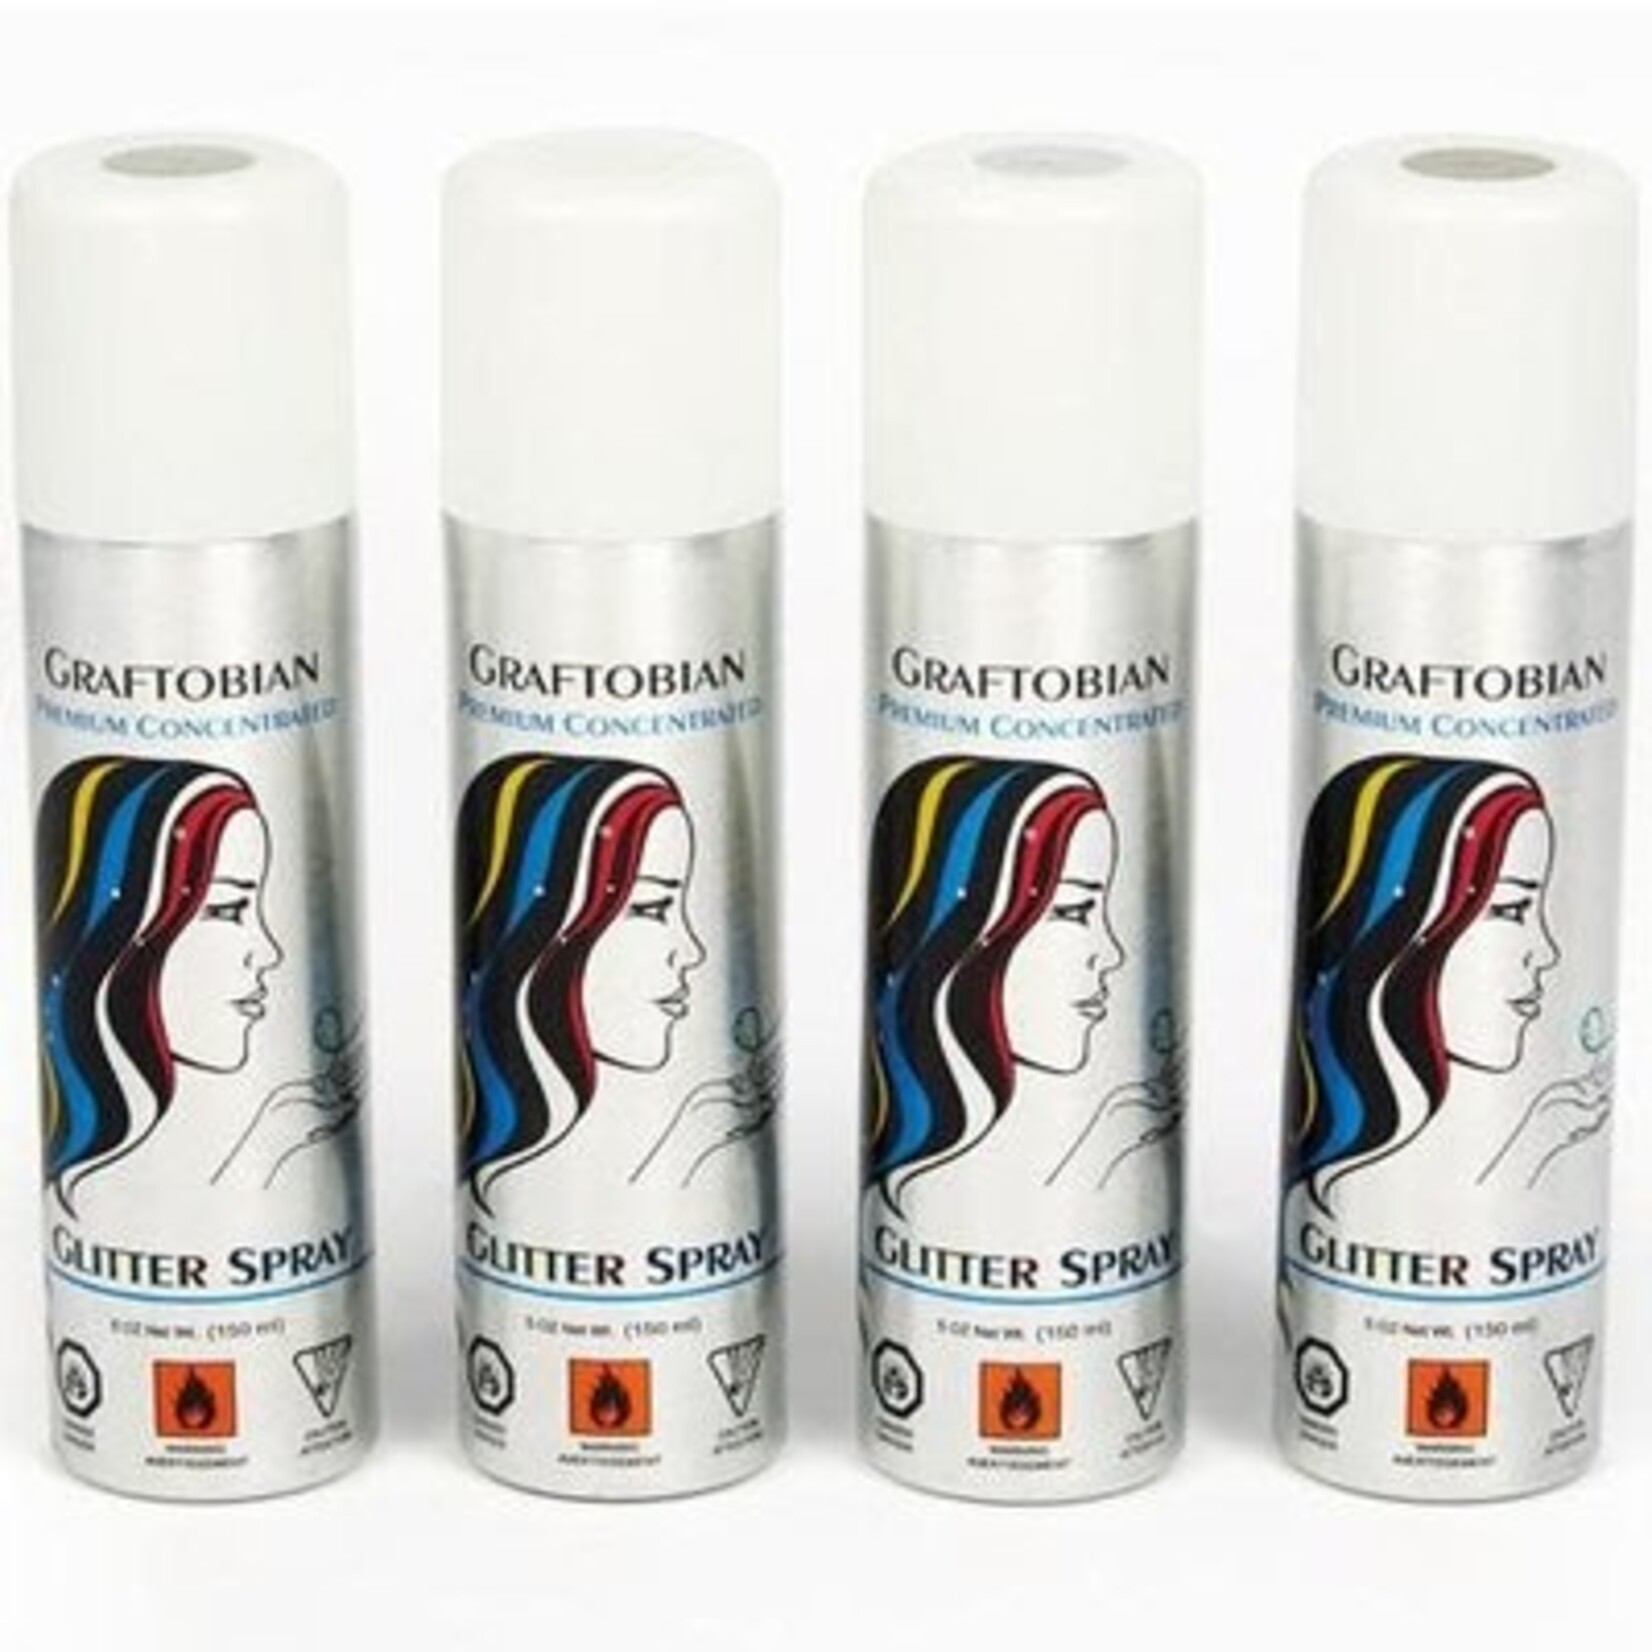 Glitter Hair Spray